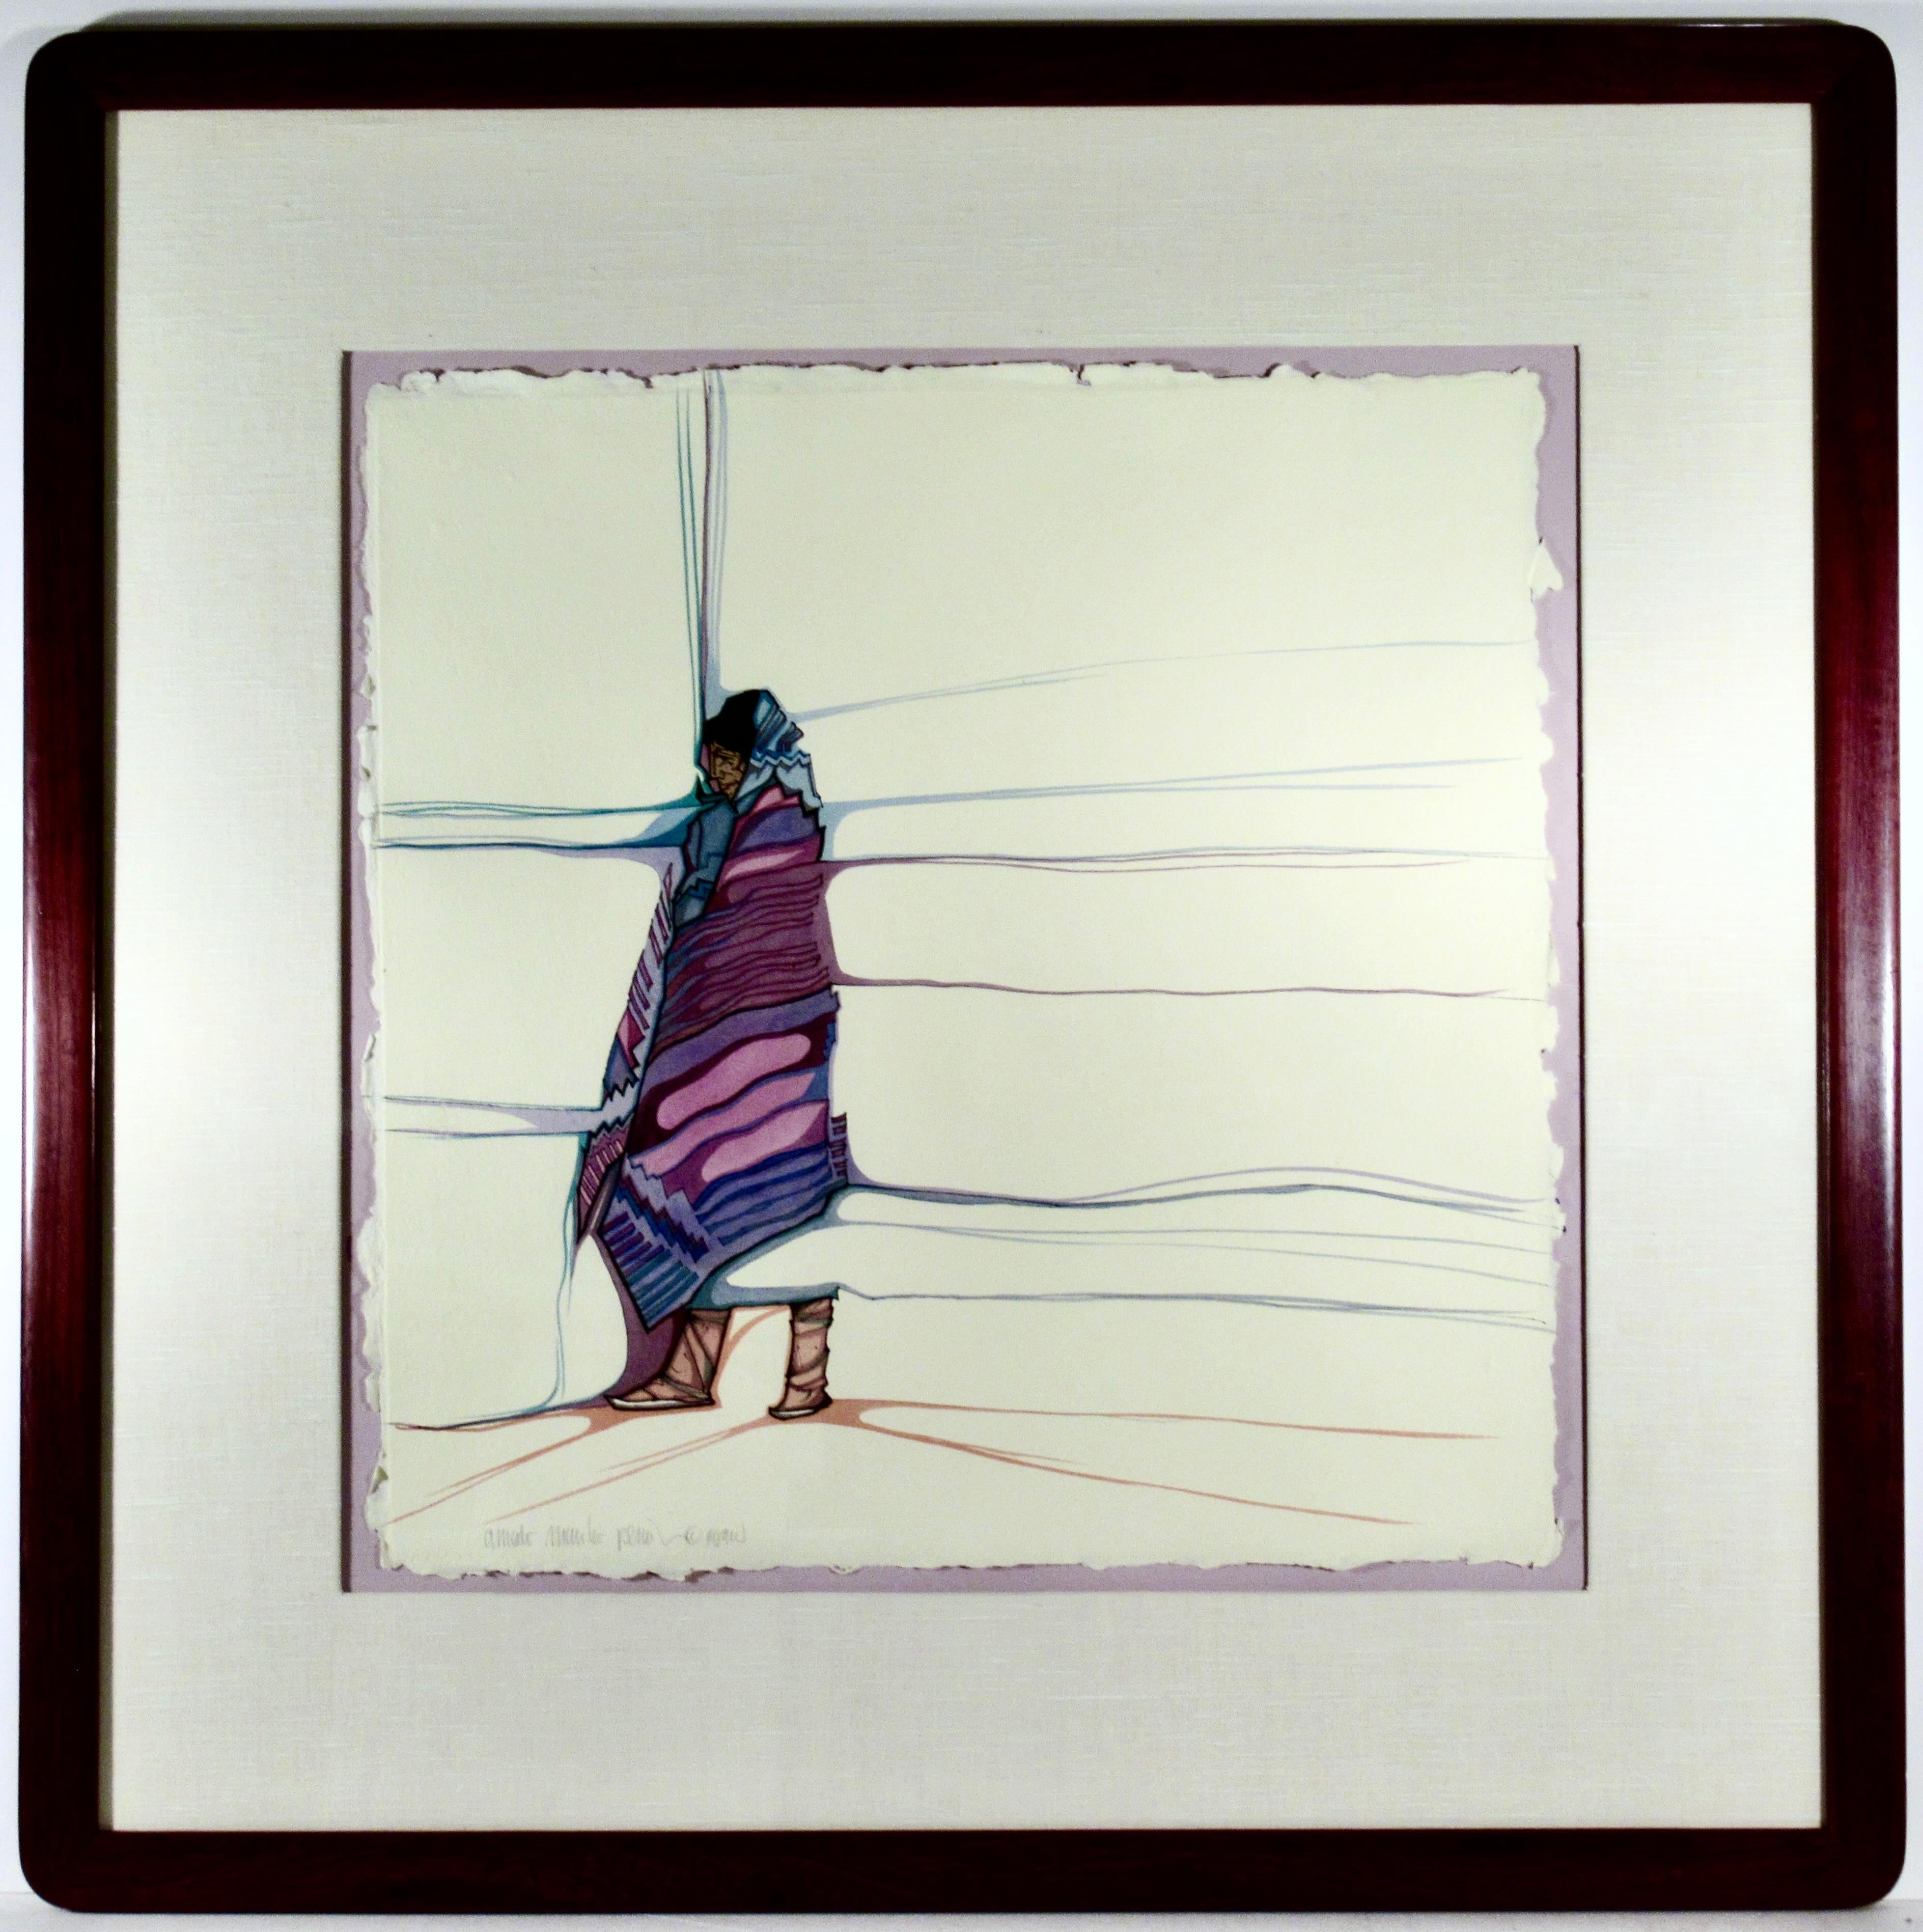 Amado Maurilio Pena Figurative Art - "Woman in Purple" from the "Colcha" series